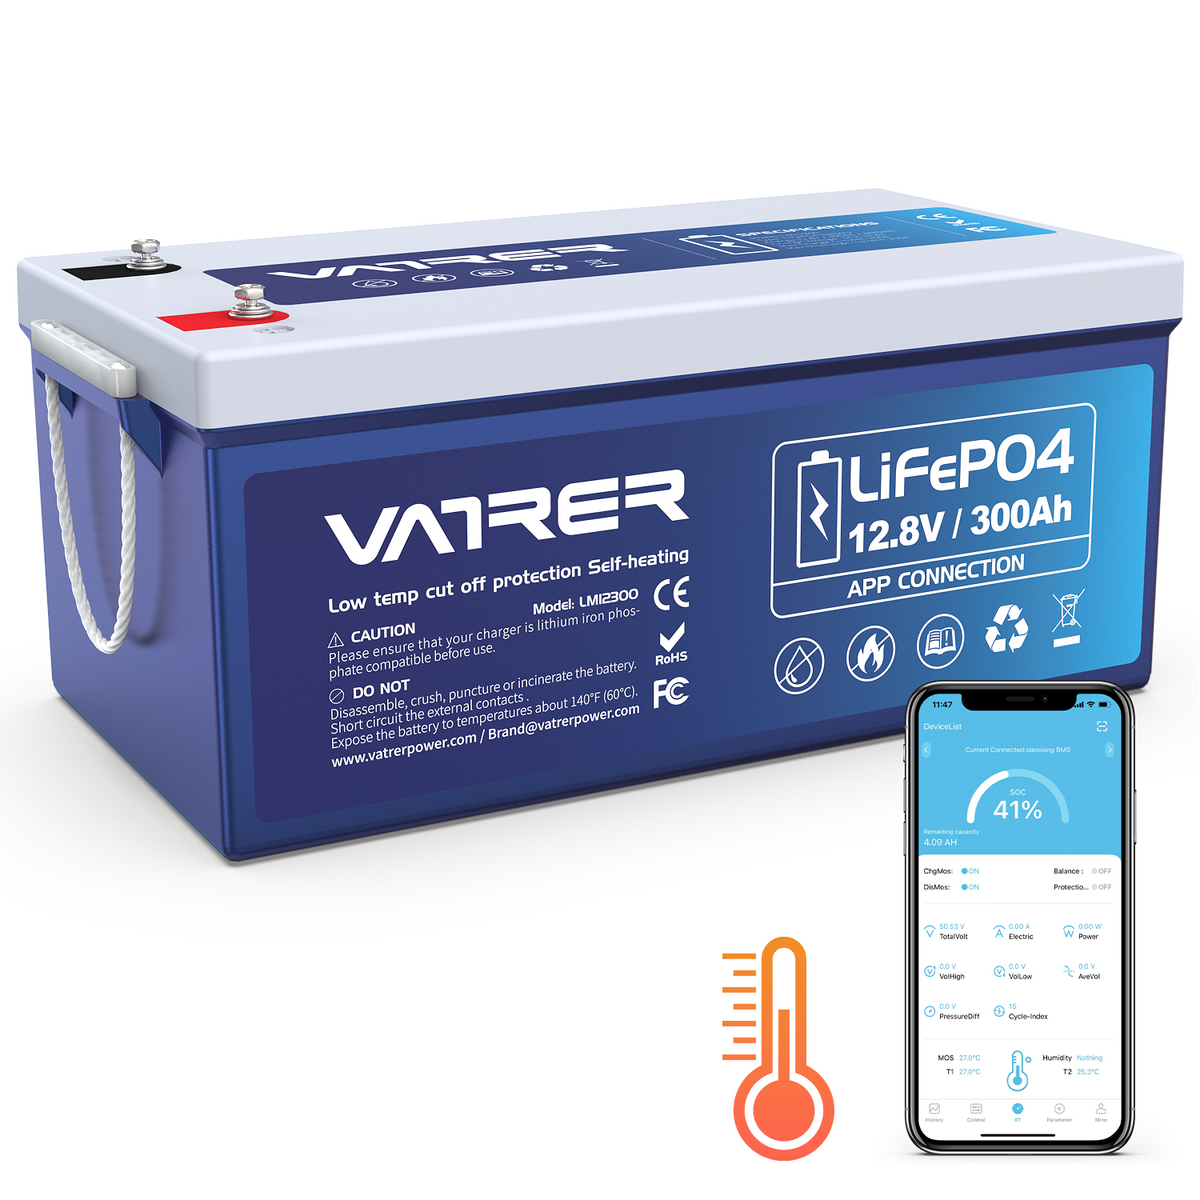 【Pre-order】Vatrer 12V 300AH Bluetooth LiFePO4 Lithium Self-Heating Battery CA 11